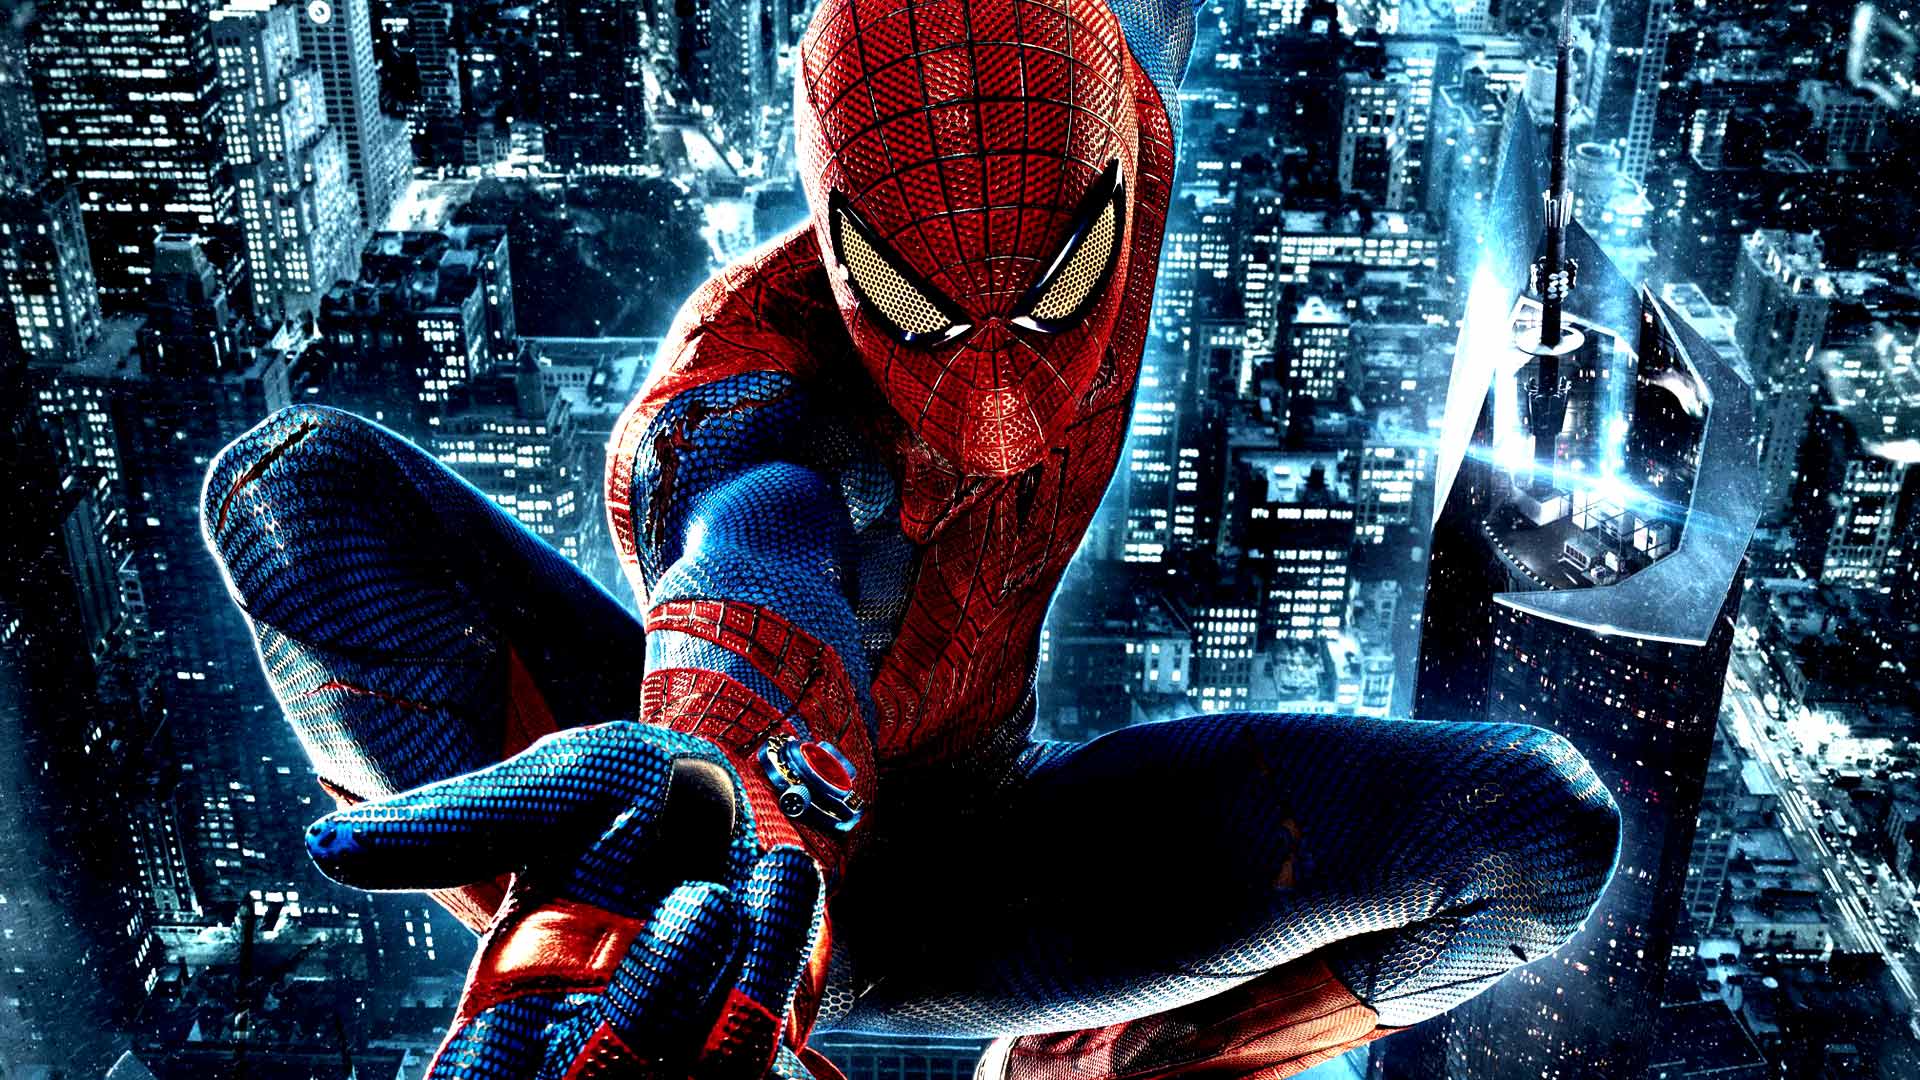 44+] Amazing Spider Man 2 Wallpaper - WallpaperSafari